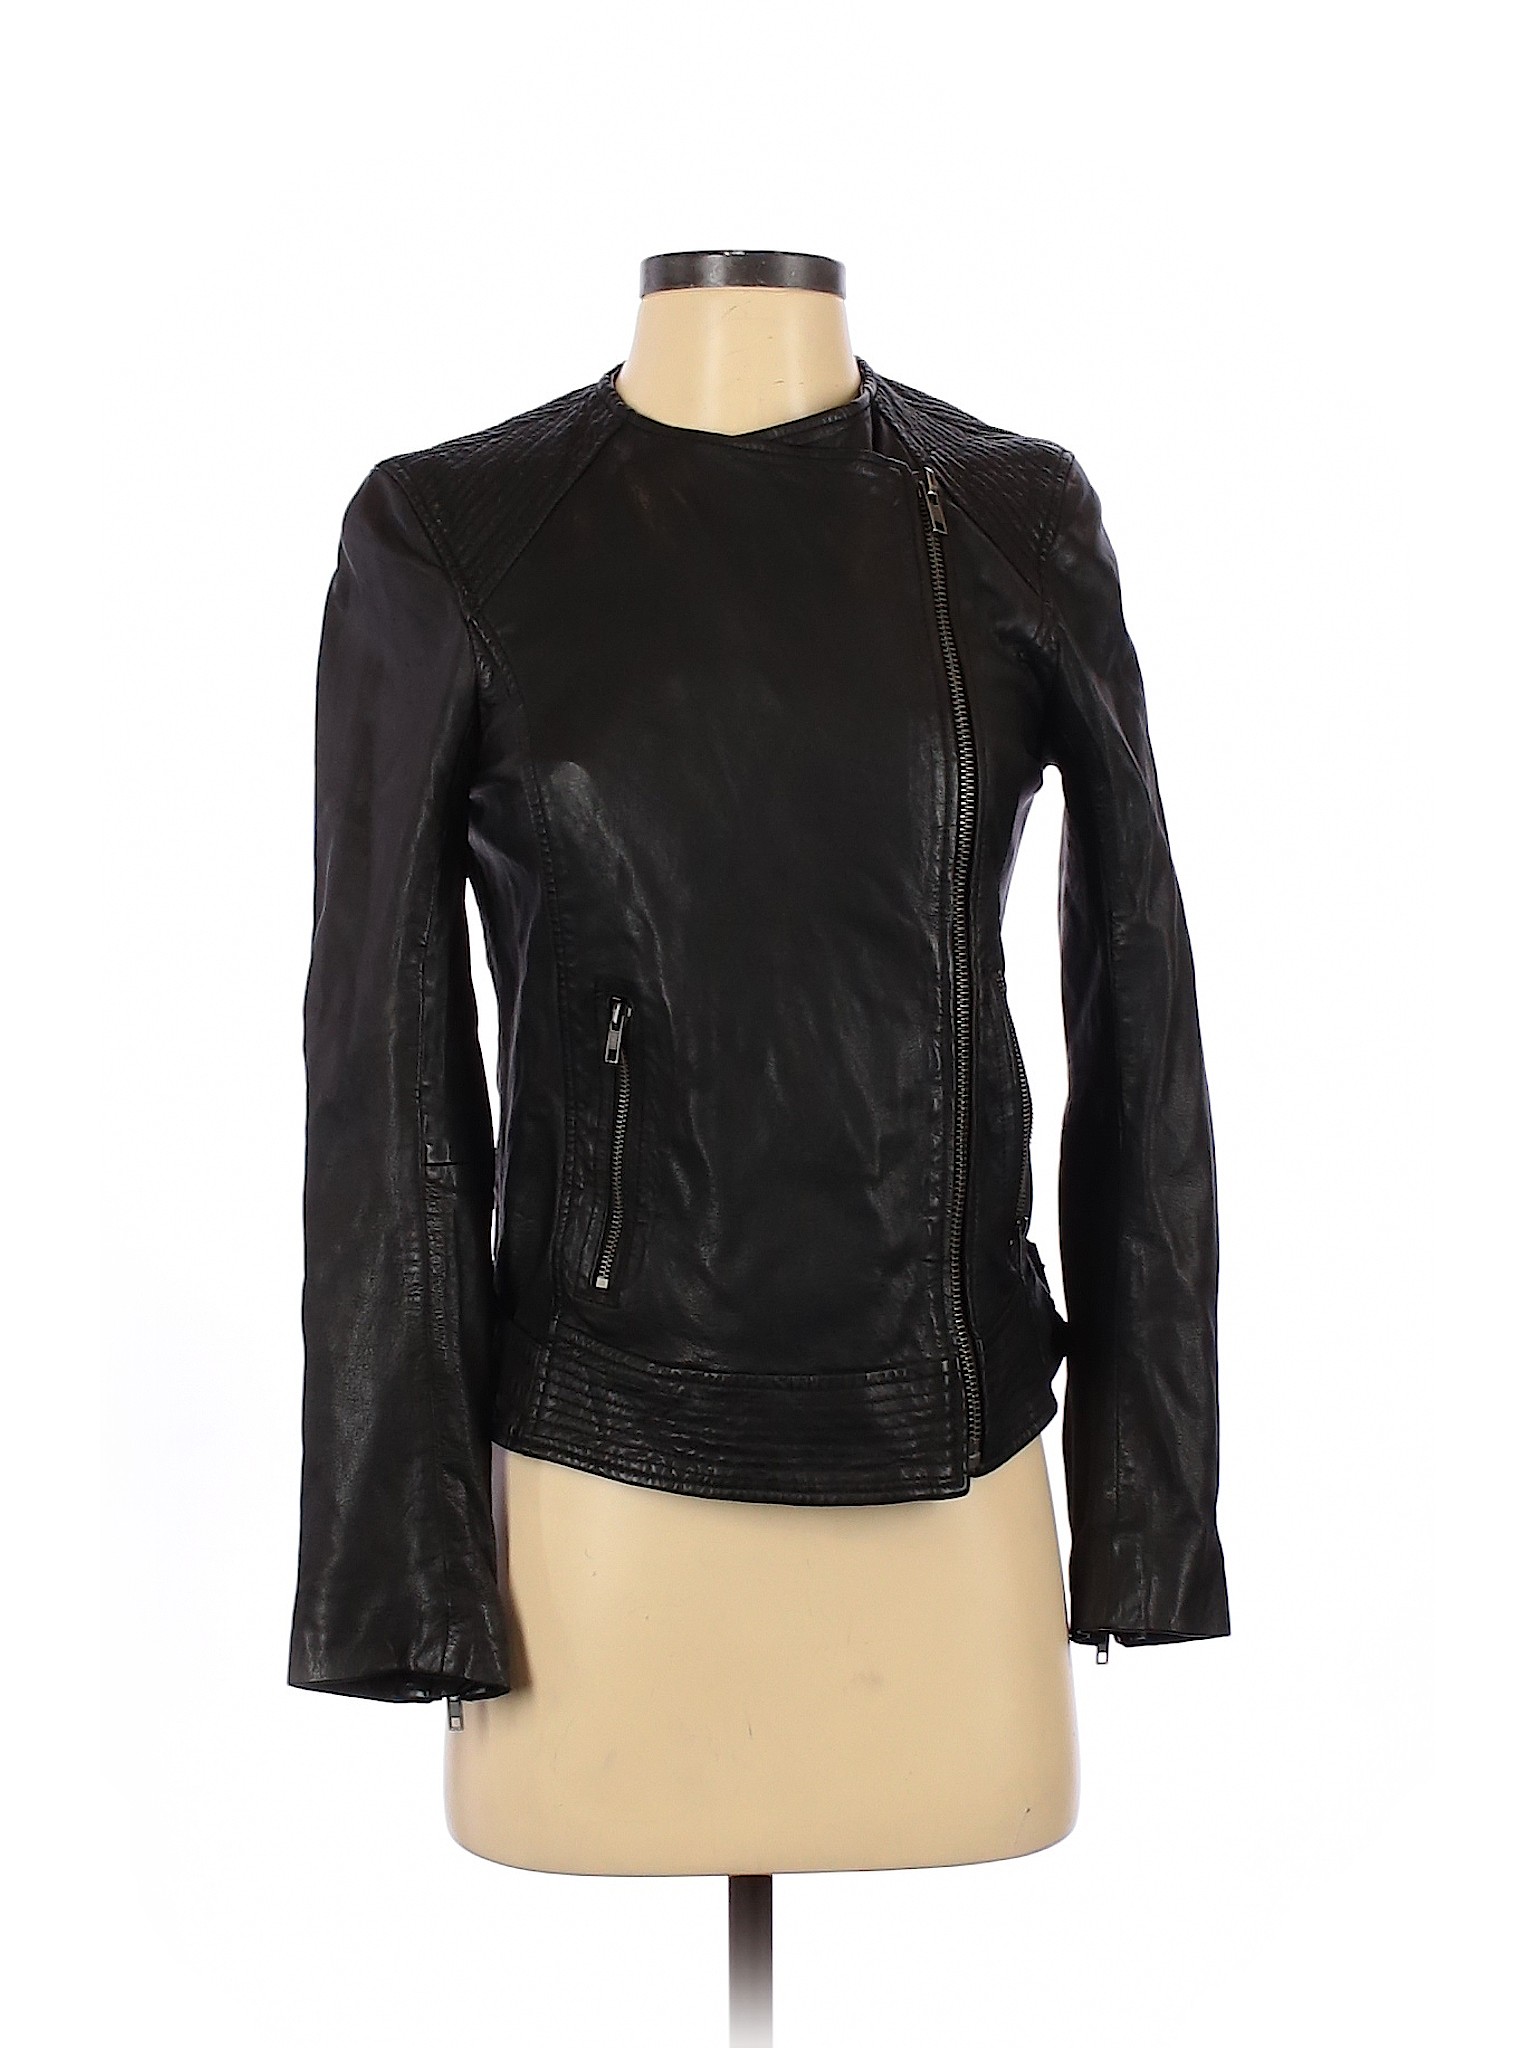 Lucky Brand Women Black Leather Jacket XS | eBay